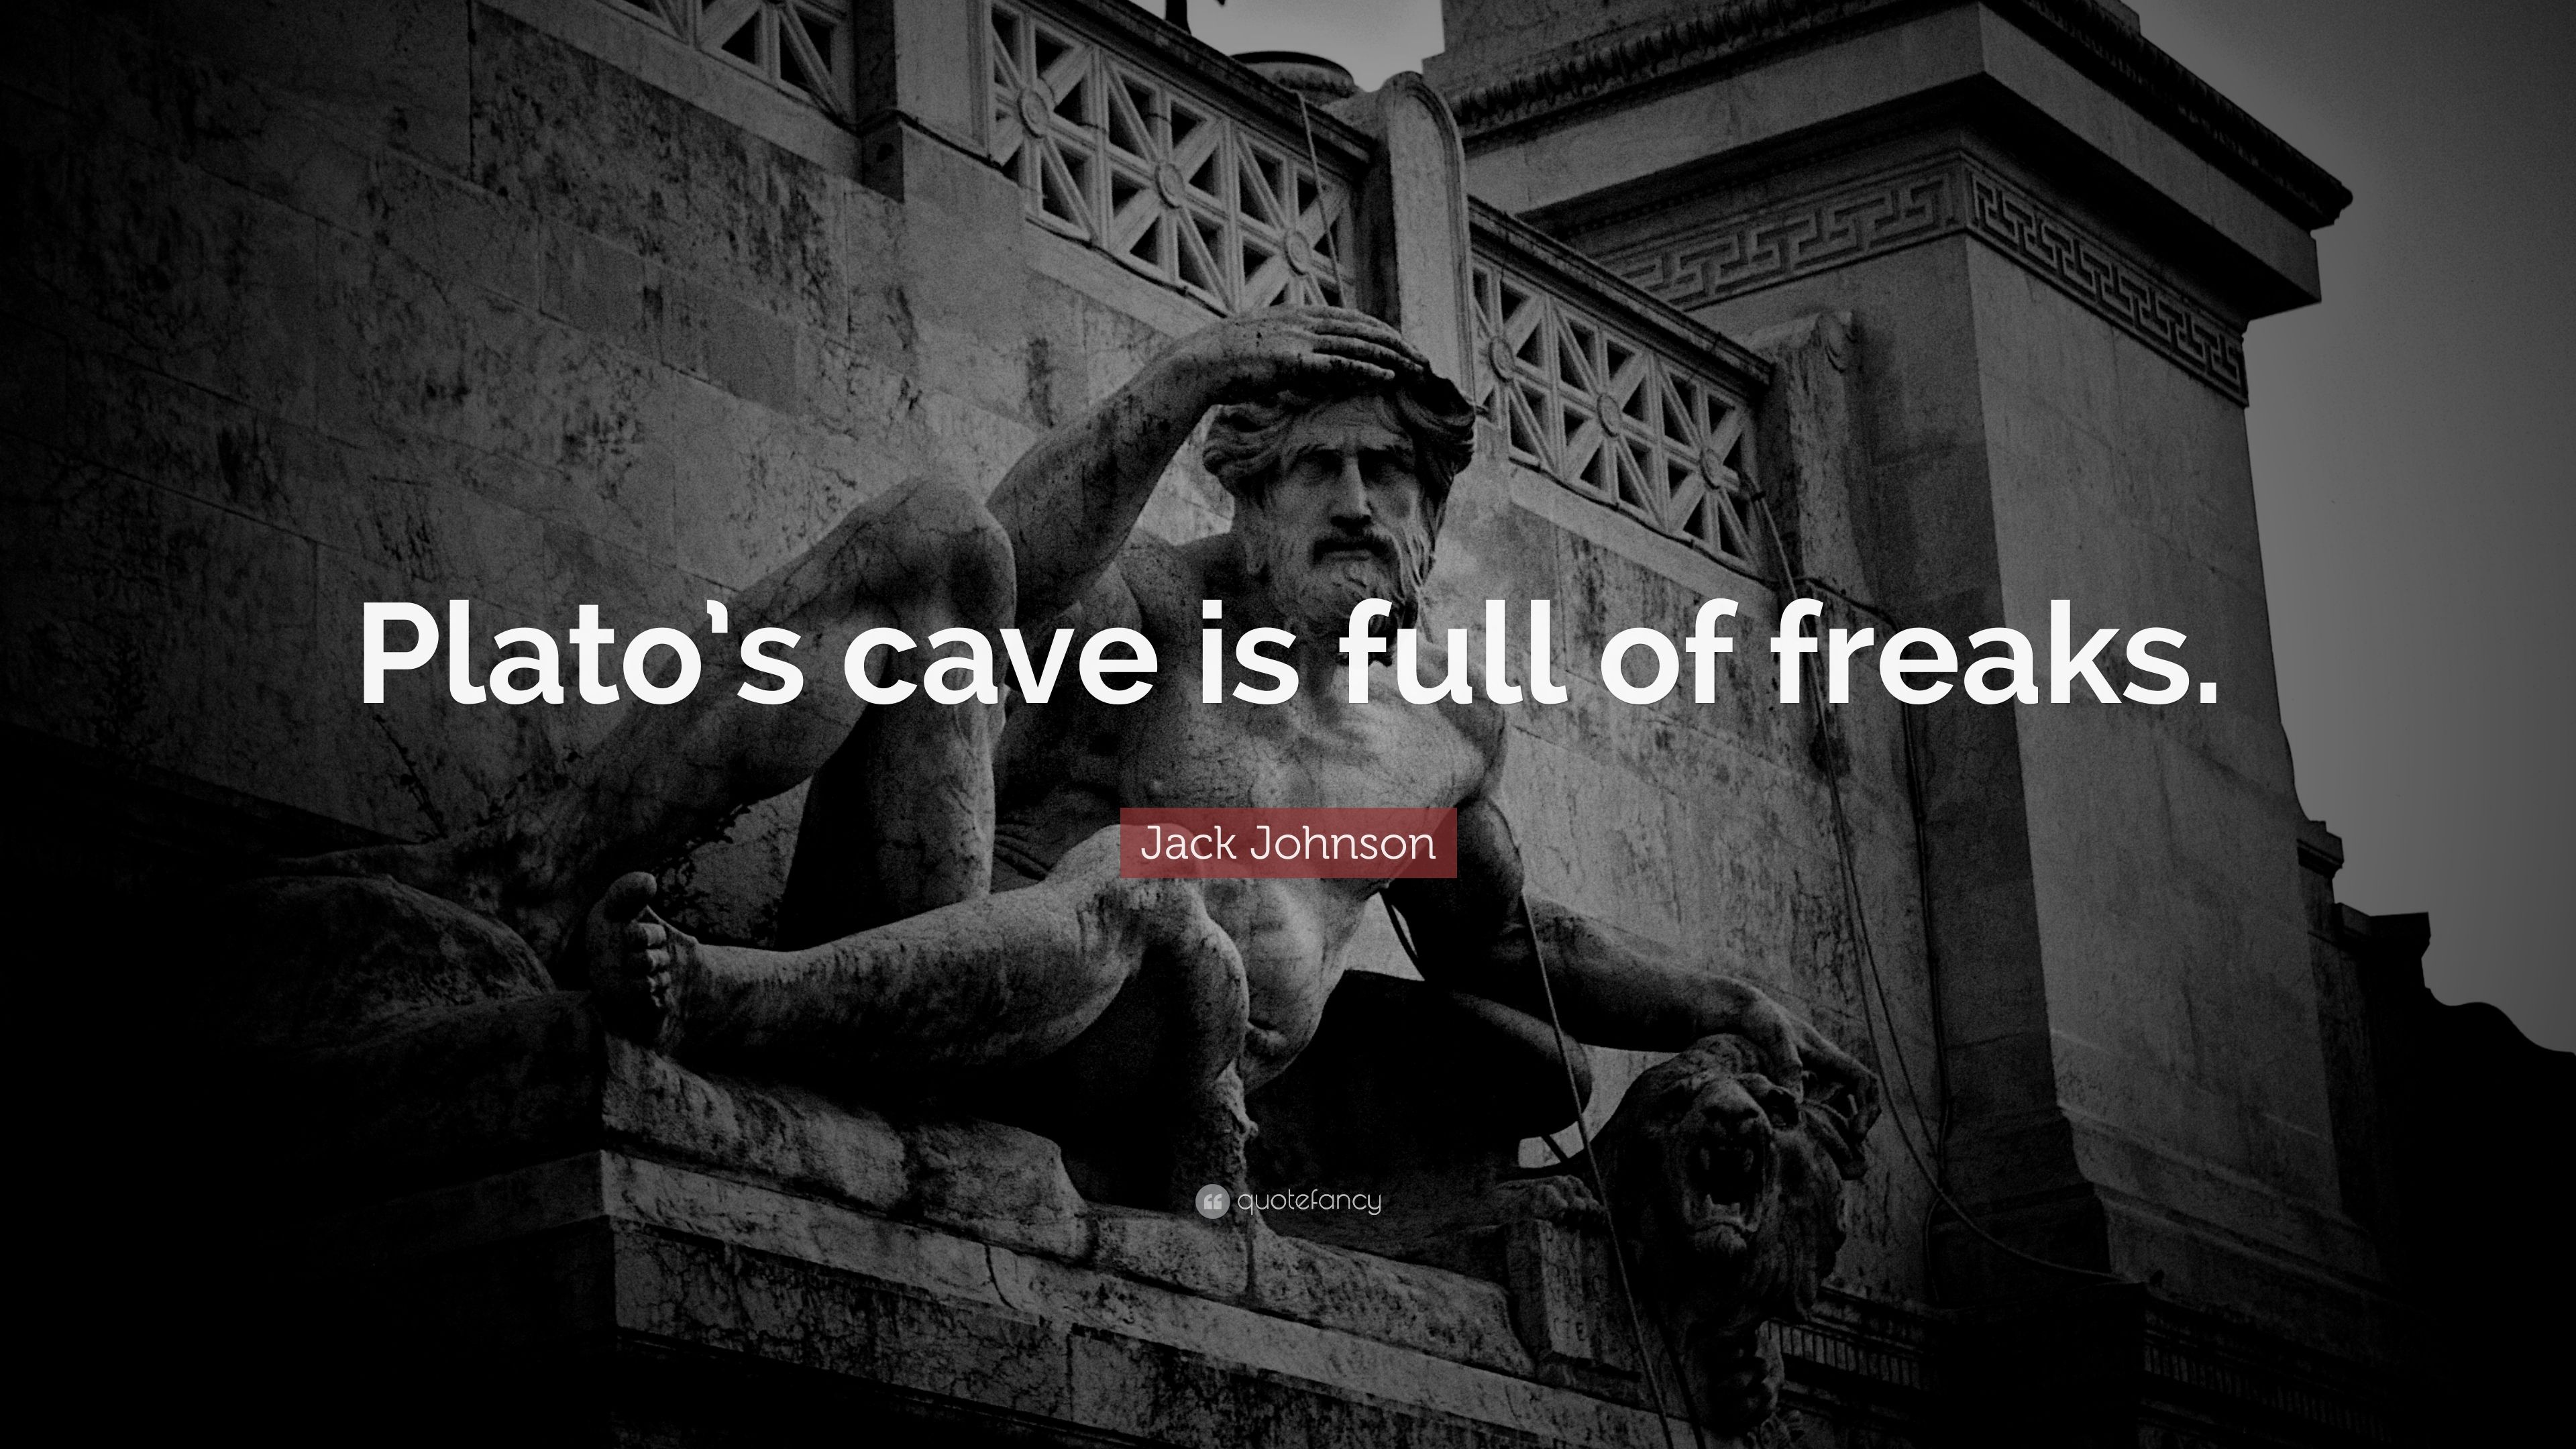 Jack Johnson Quote: “Plato's cave is full of freaks.” (9 wallpaper)